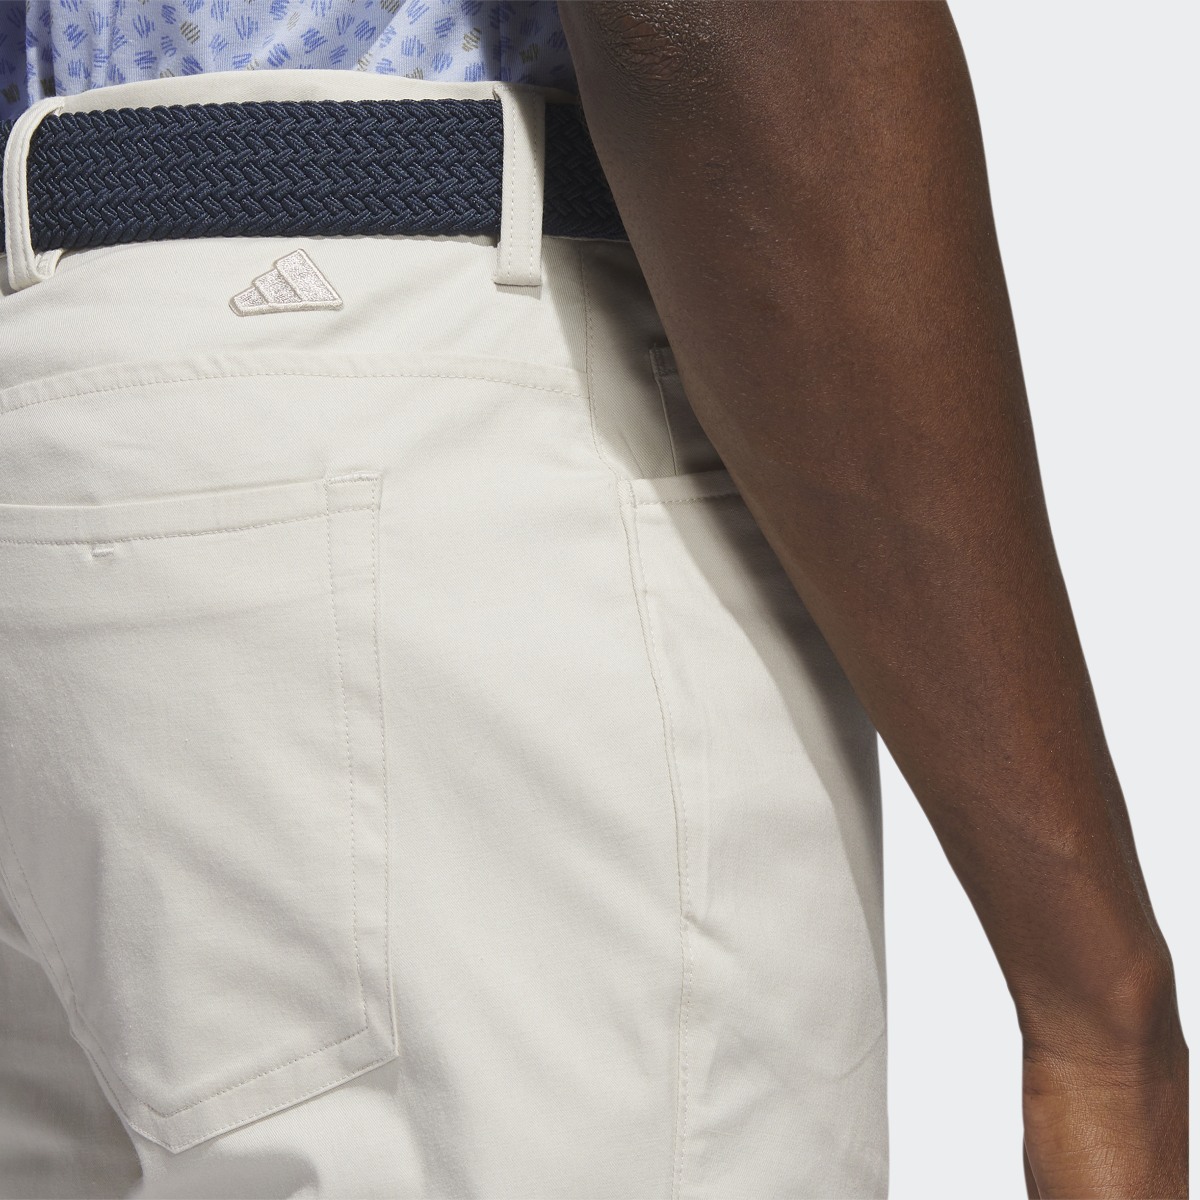 Adidas Go-To 5-Pocket Golf Pants. 6